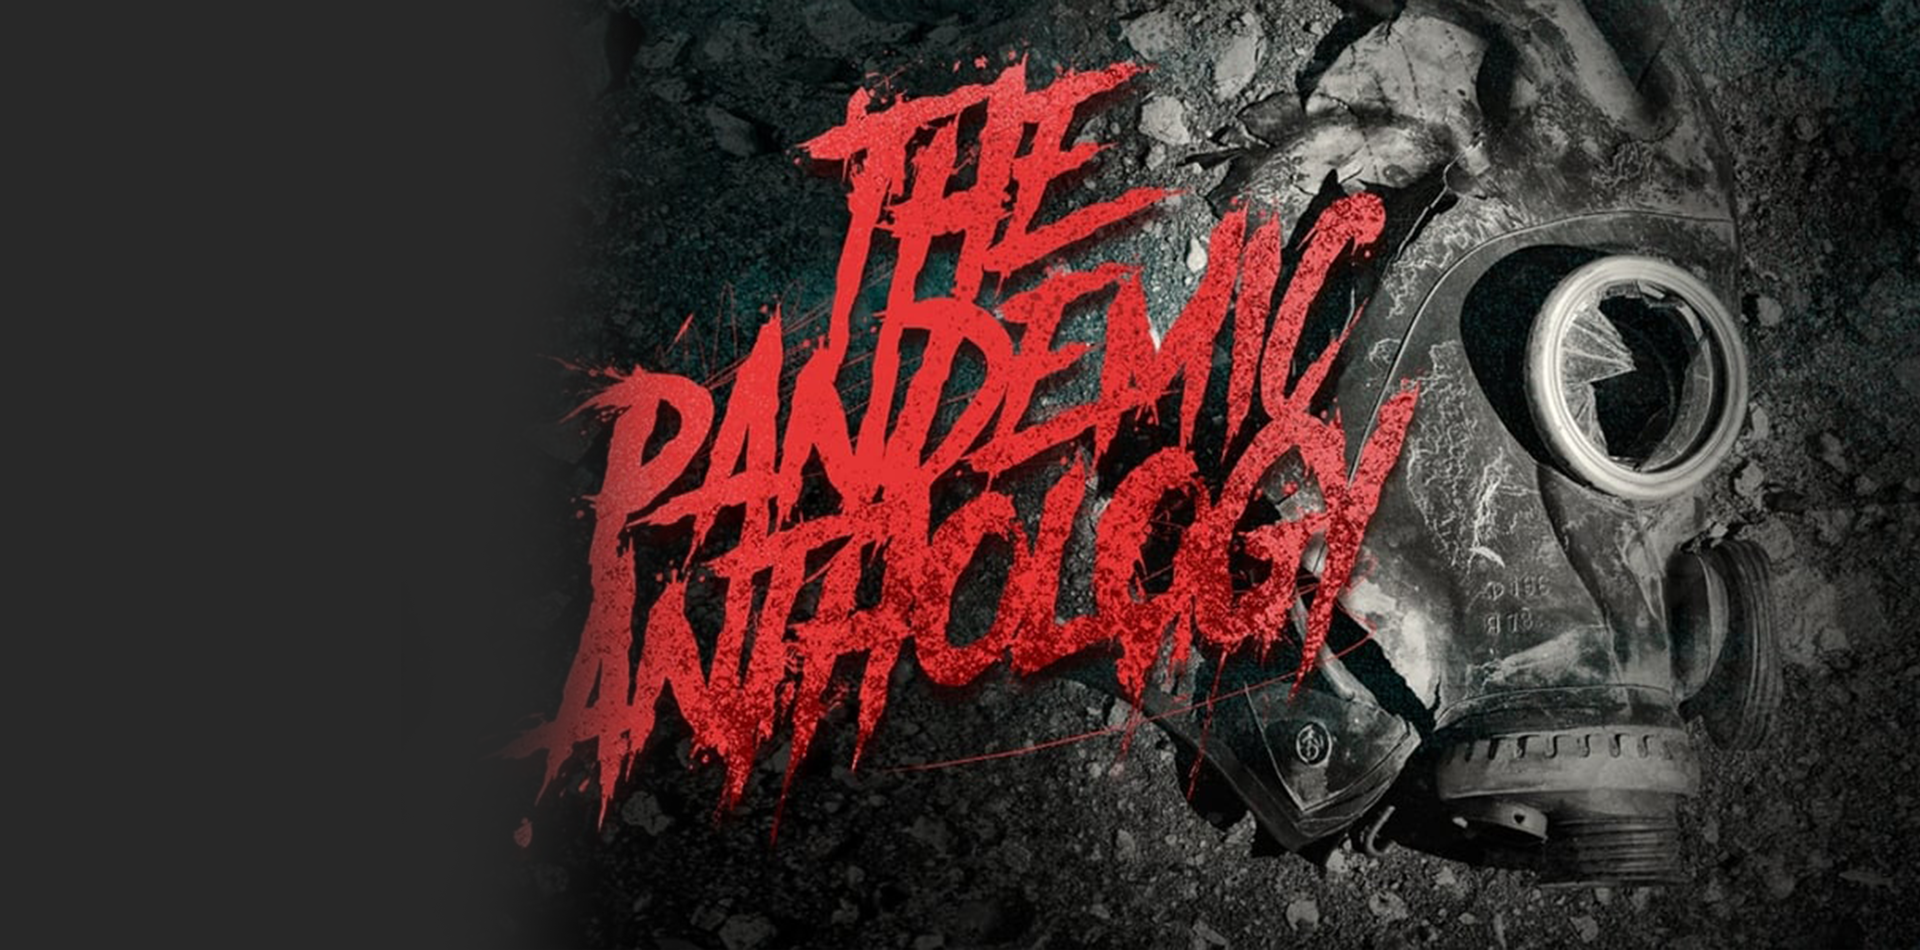 THE PANDEMIC ANTHOLOGY